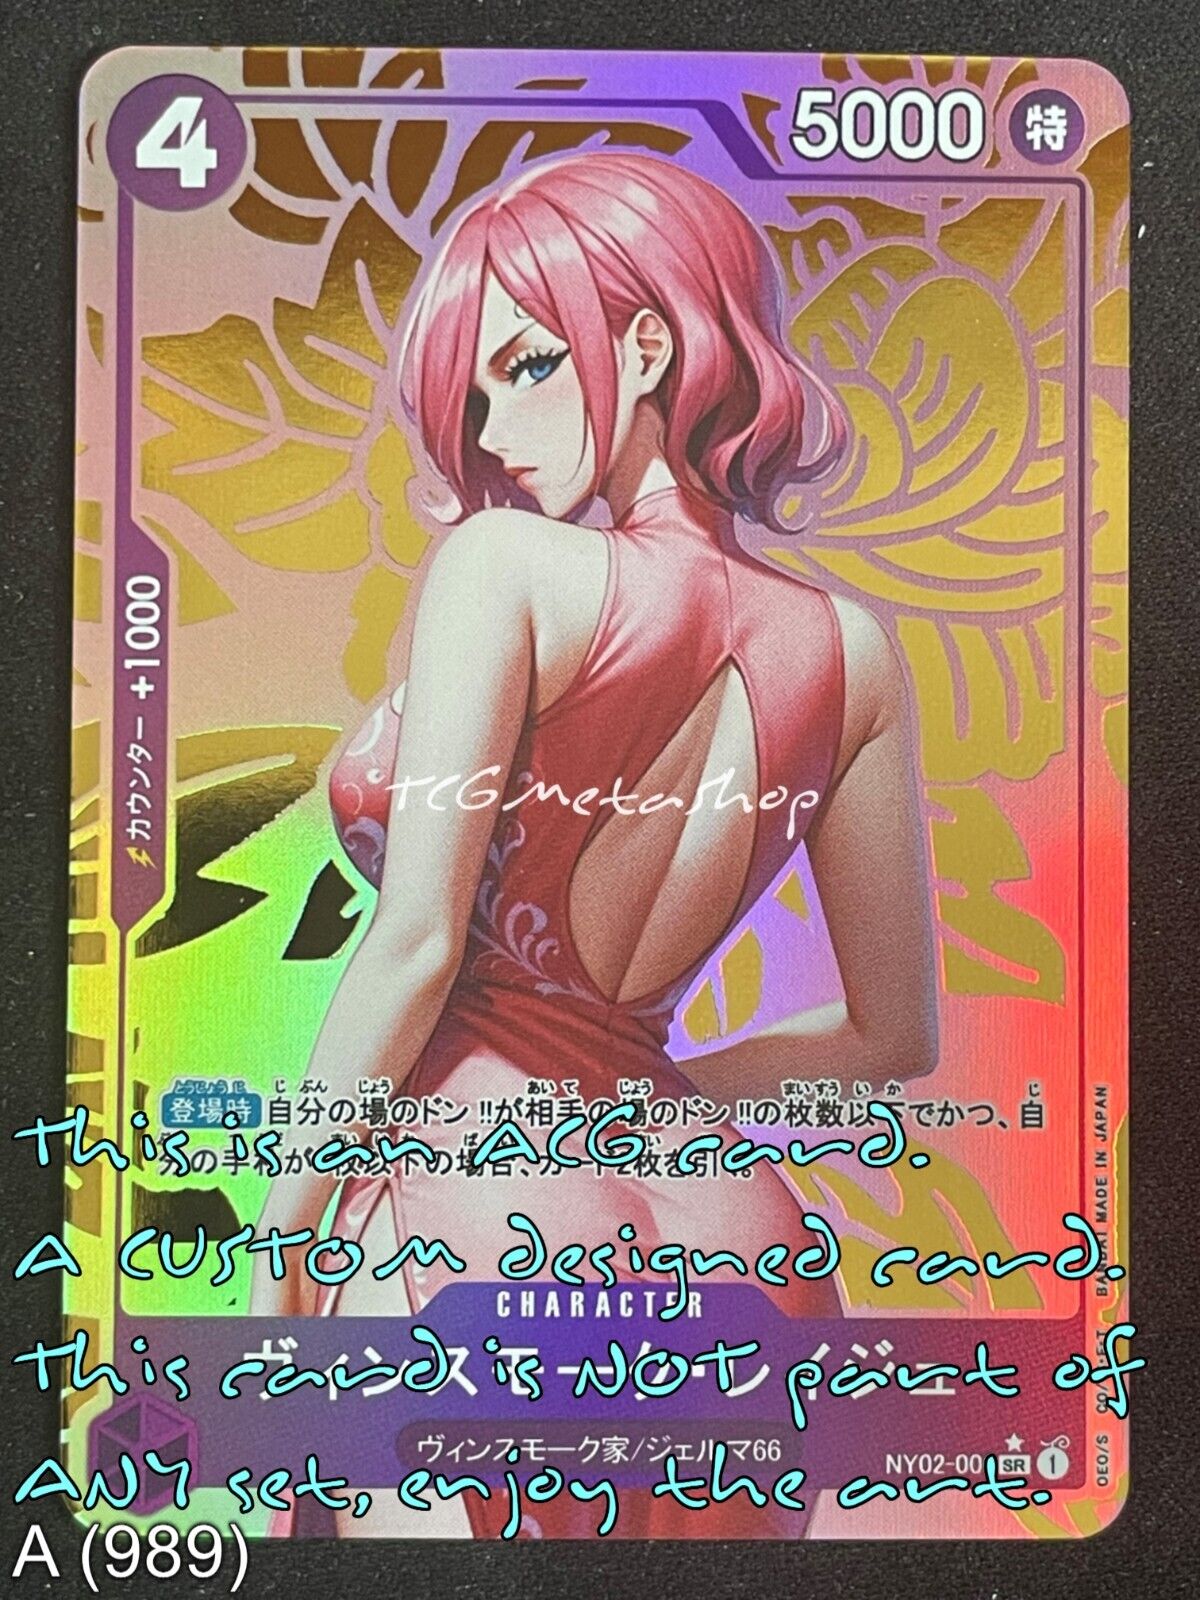 🔥 A 989 Reiju Vinsmoke One Piece Goddess Story Anime Waifu Card ACG 🔥